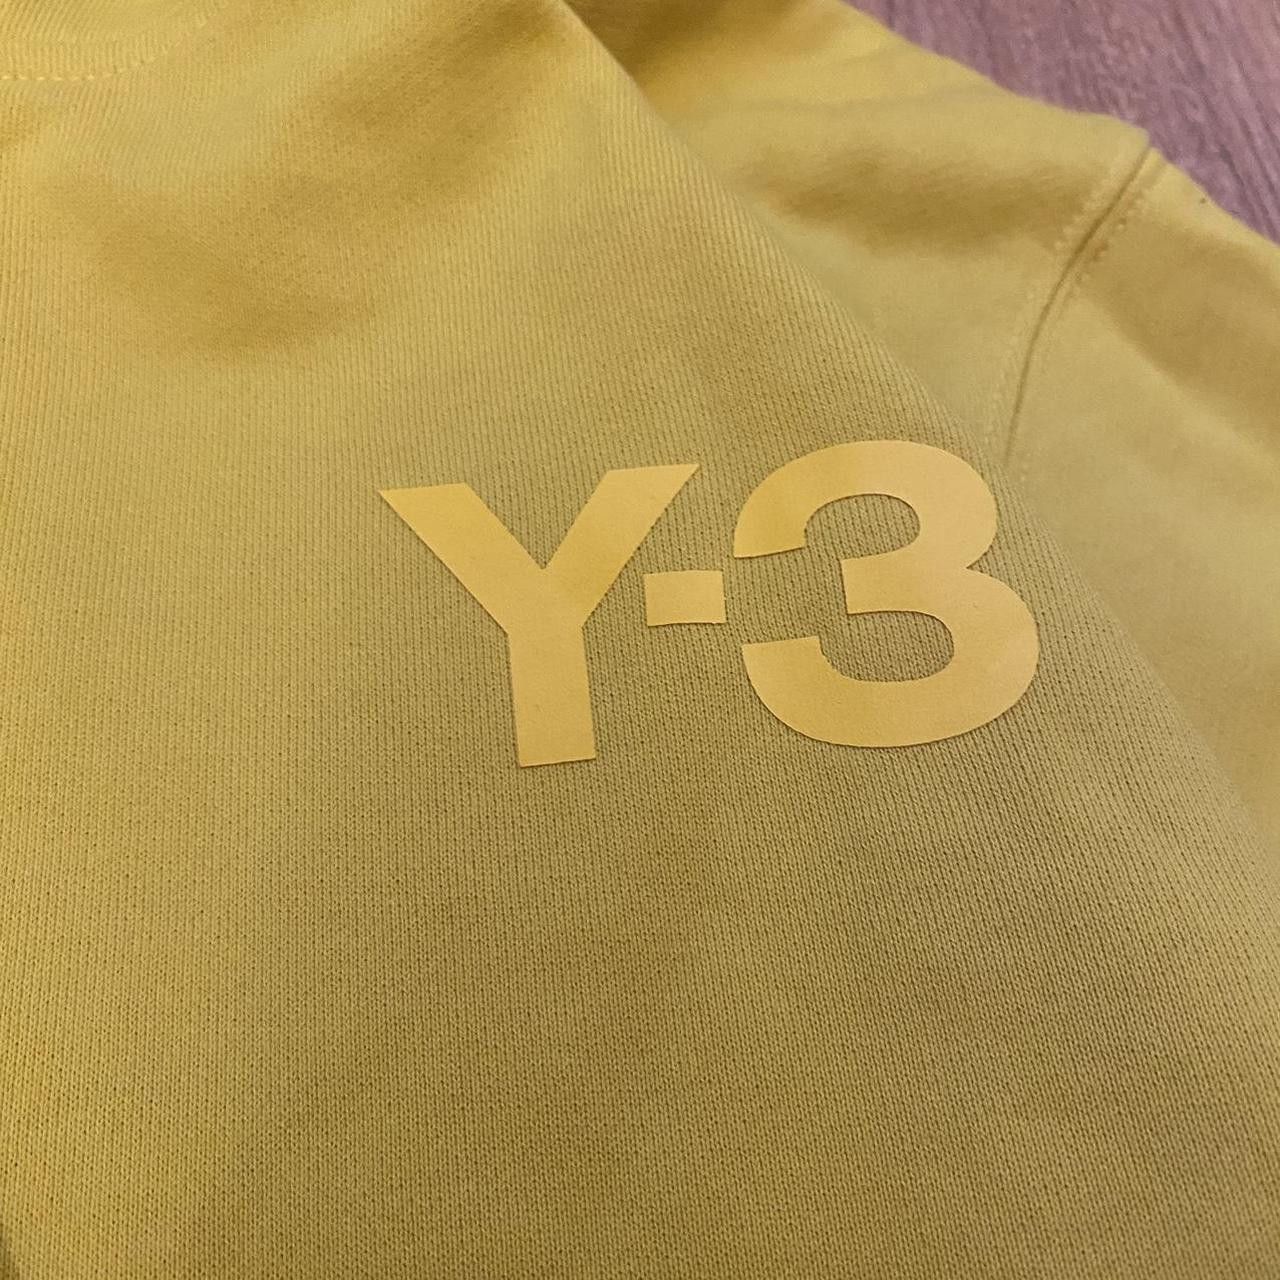 Vintage Y-3 hoodie Size US XL / EU 56 / 4 - 5 Thumbnail